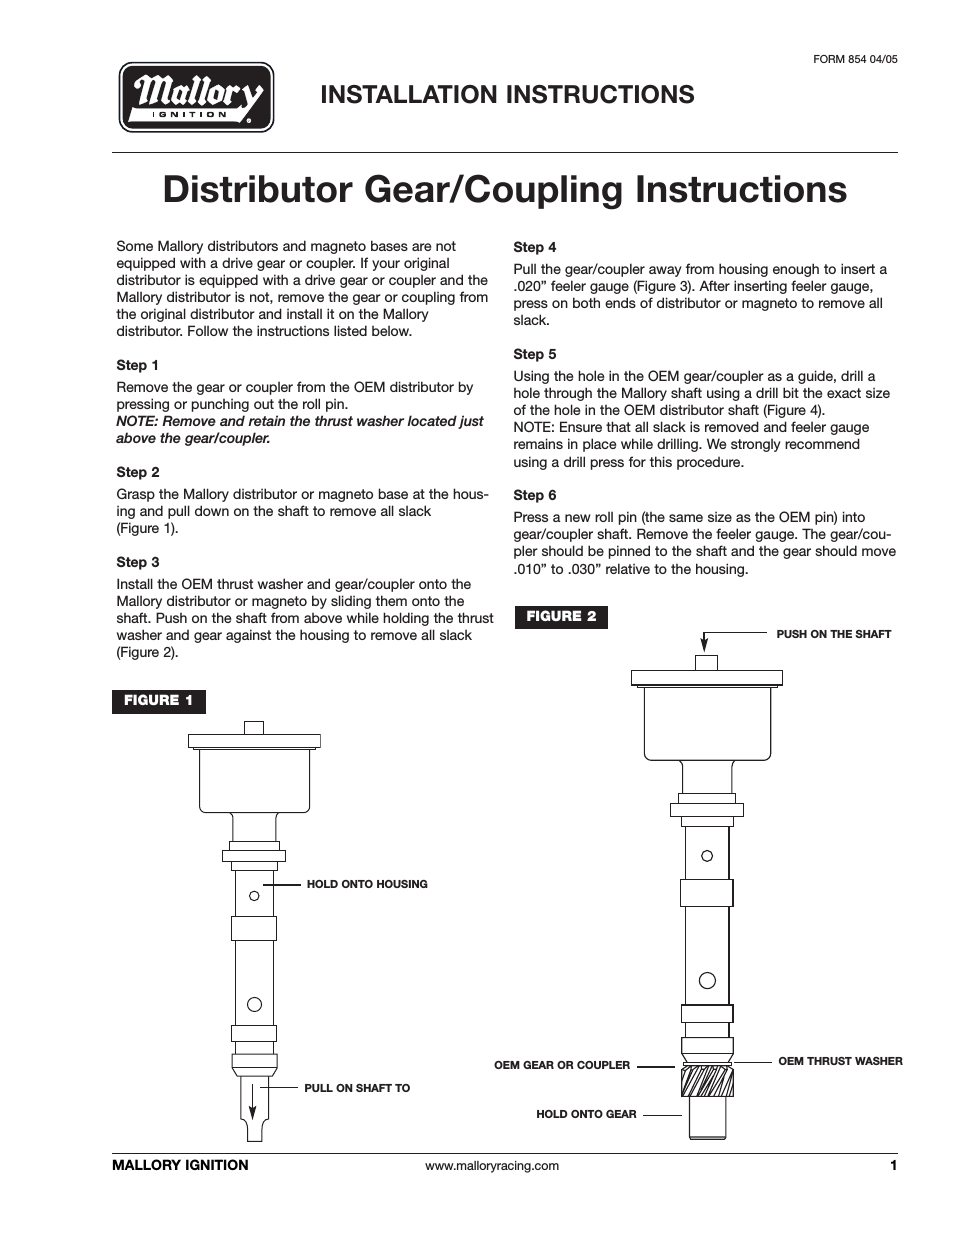 Mallory Distributor Gear/Coupling